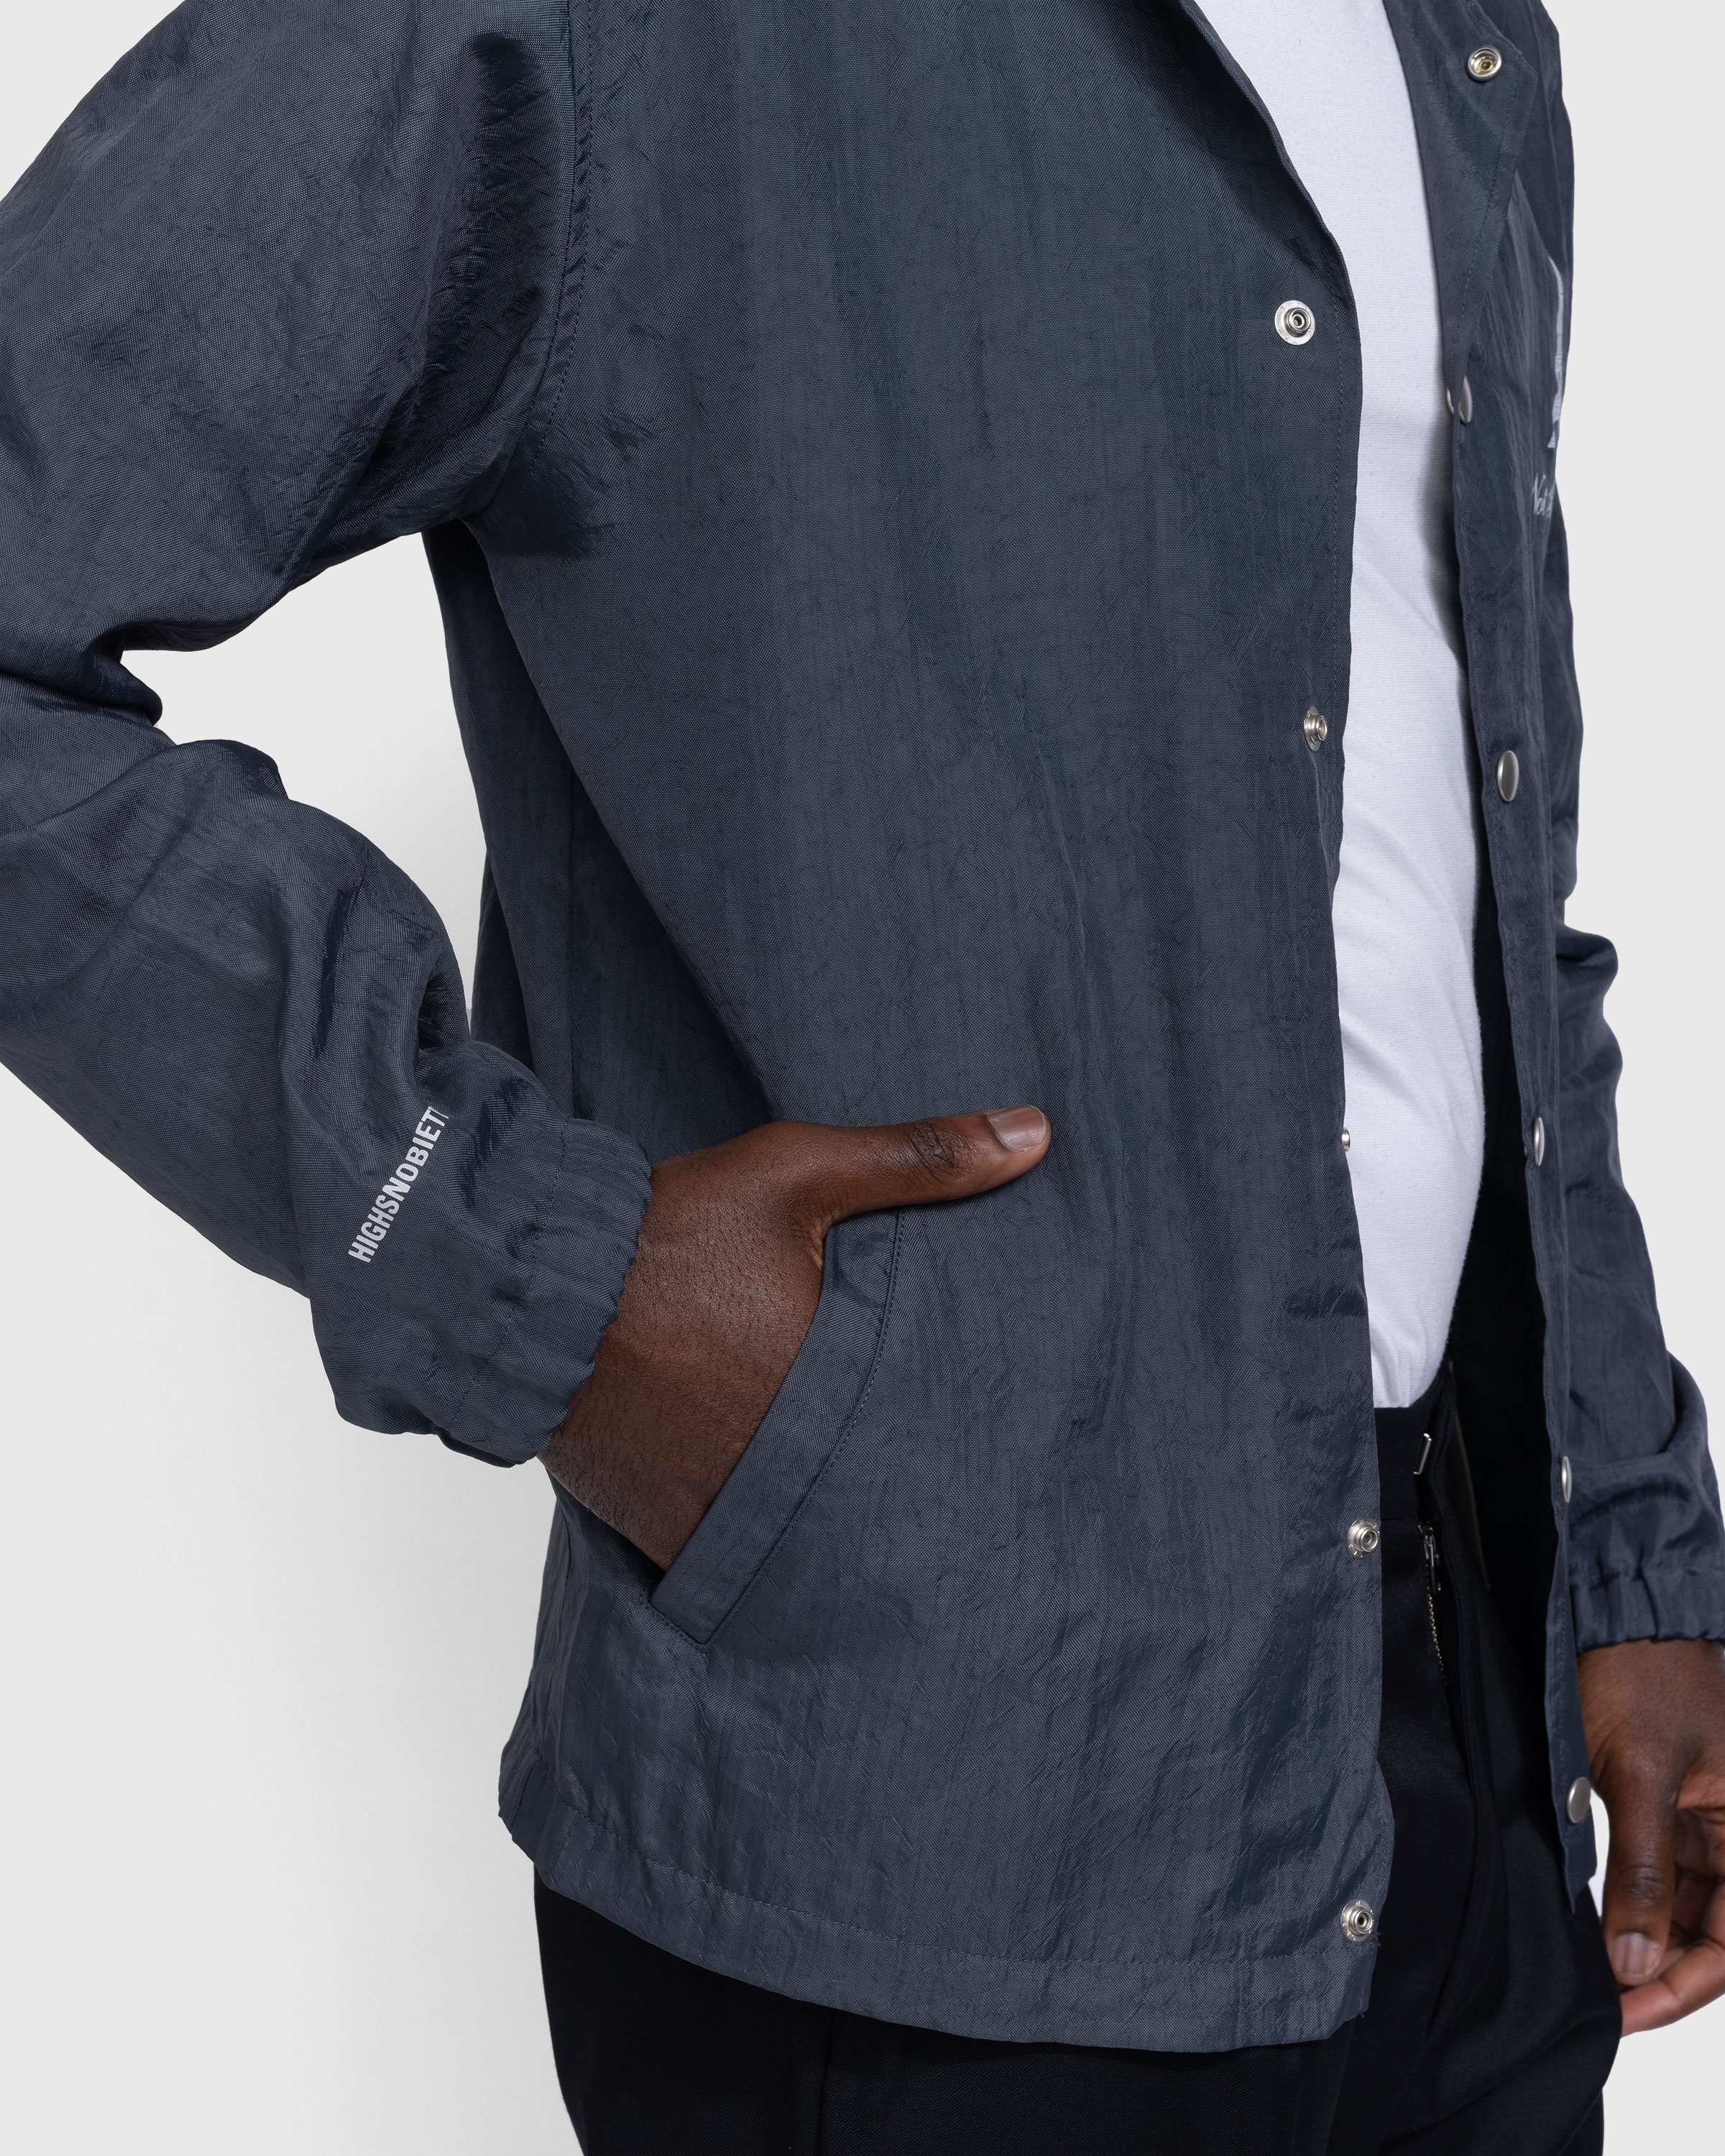 Highsnobiety – Not in Paris 5 Coach Jacket - Outerwear - Grey - Image 5